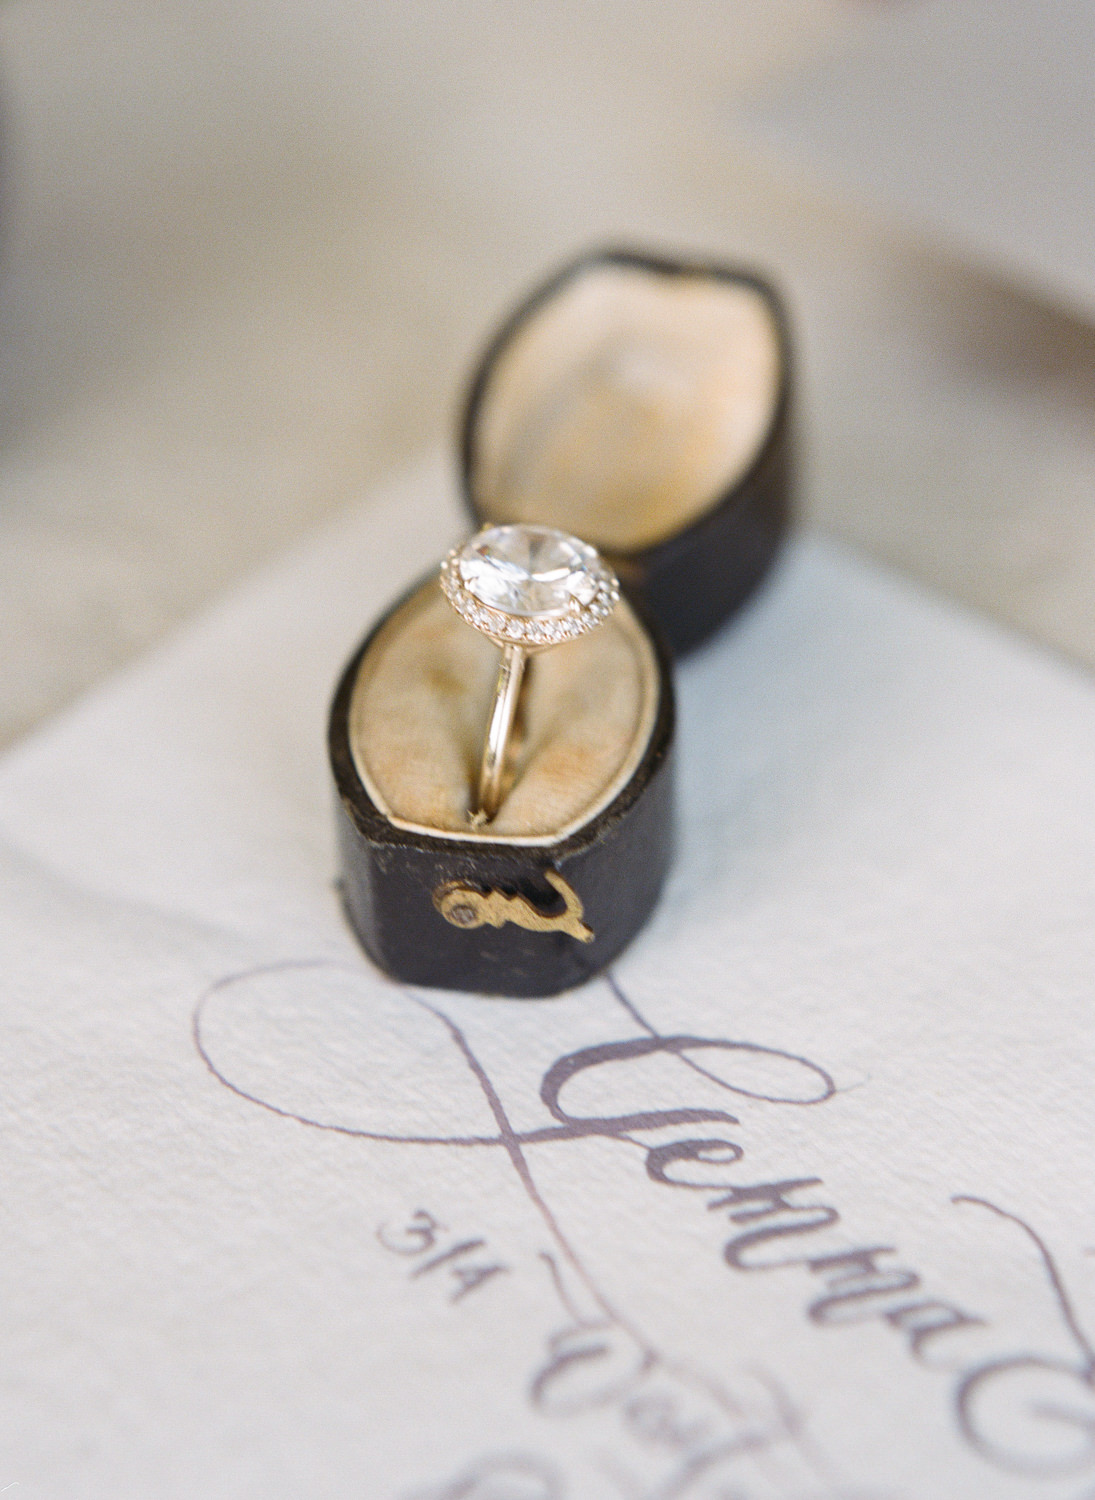 Susie Saltzman diamond engagement ring in blue vintage ring box, St Louis Fine Art Film Wedding Photographer Erica Robnett Photography